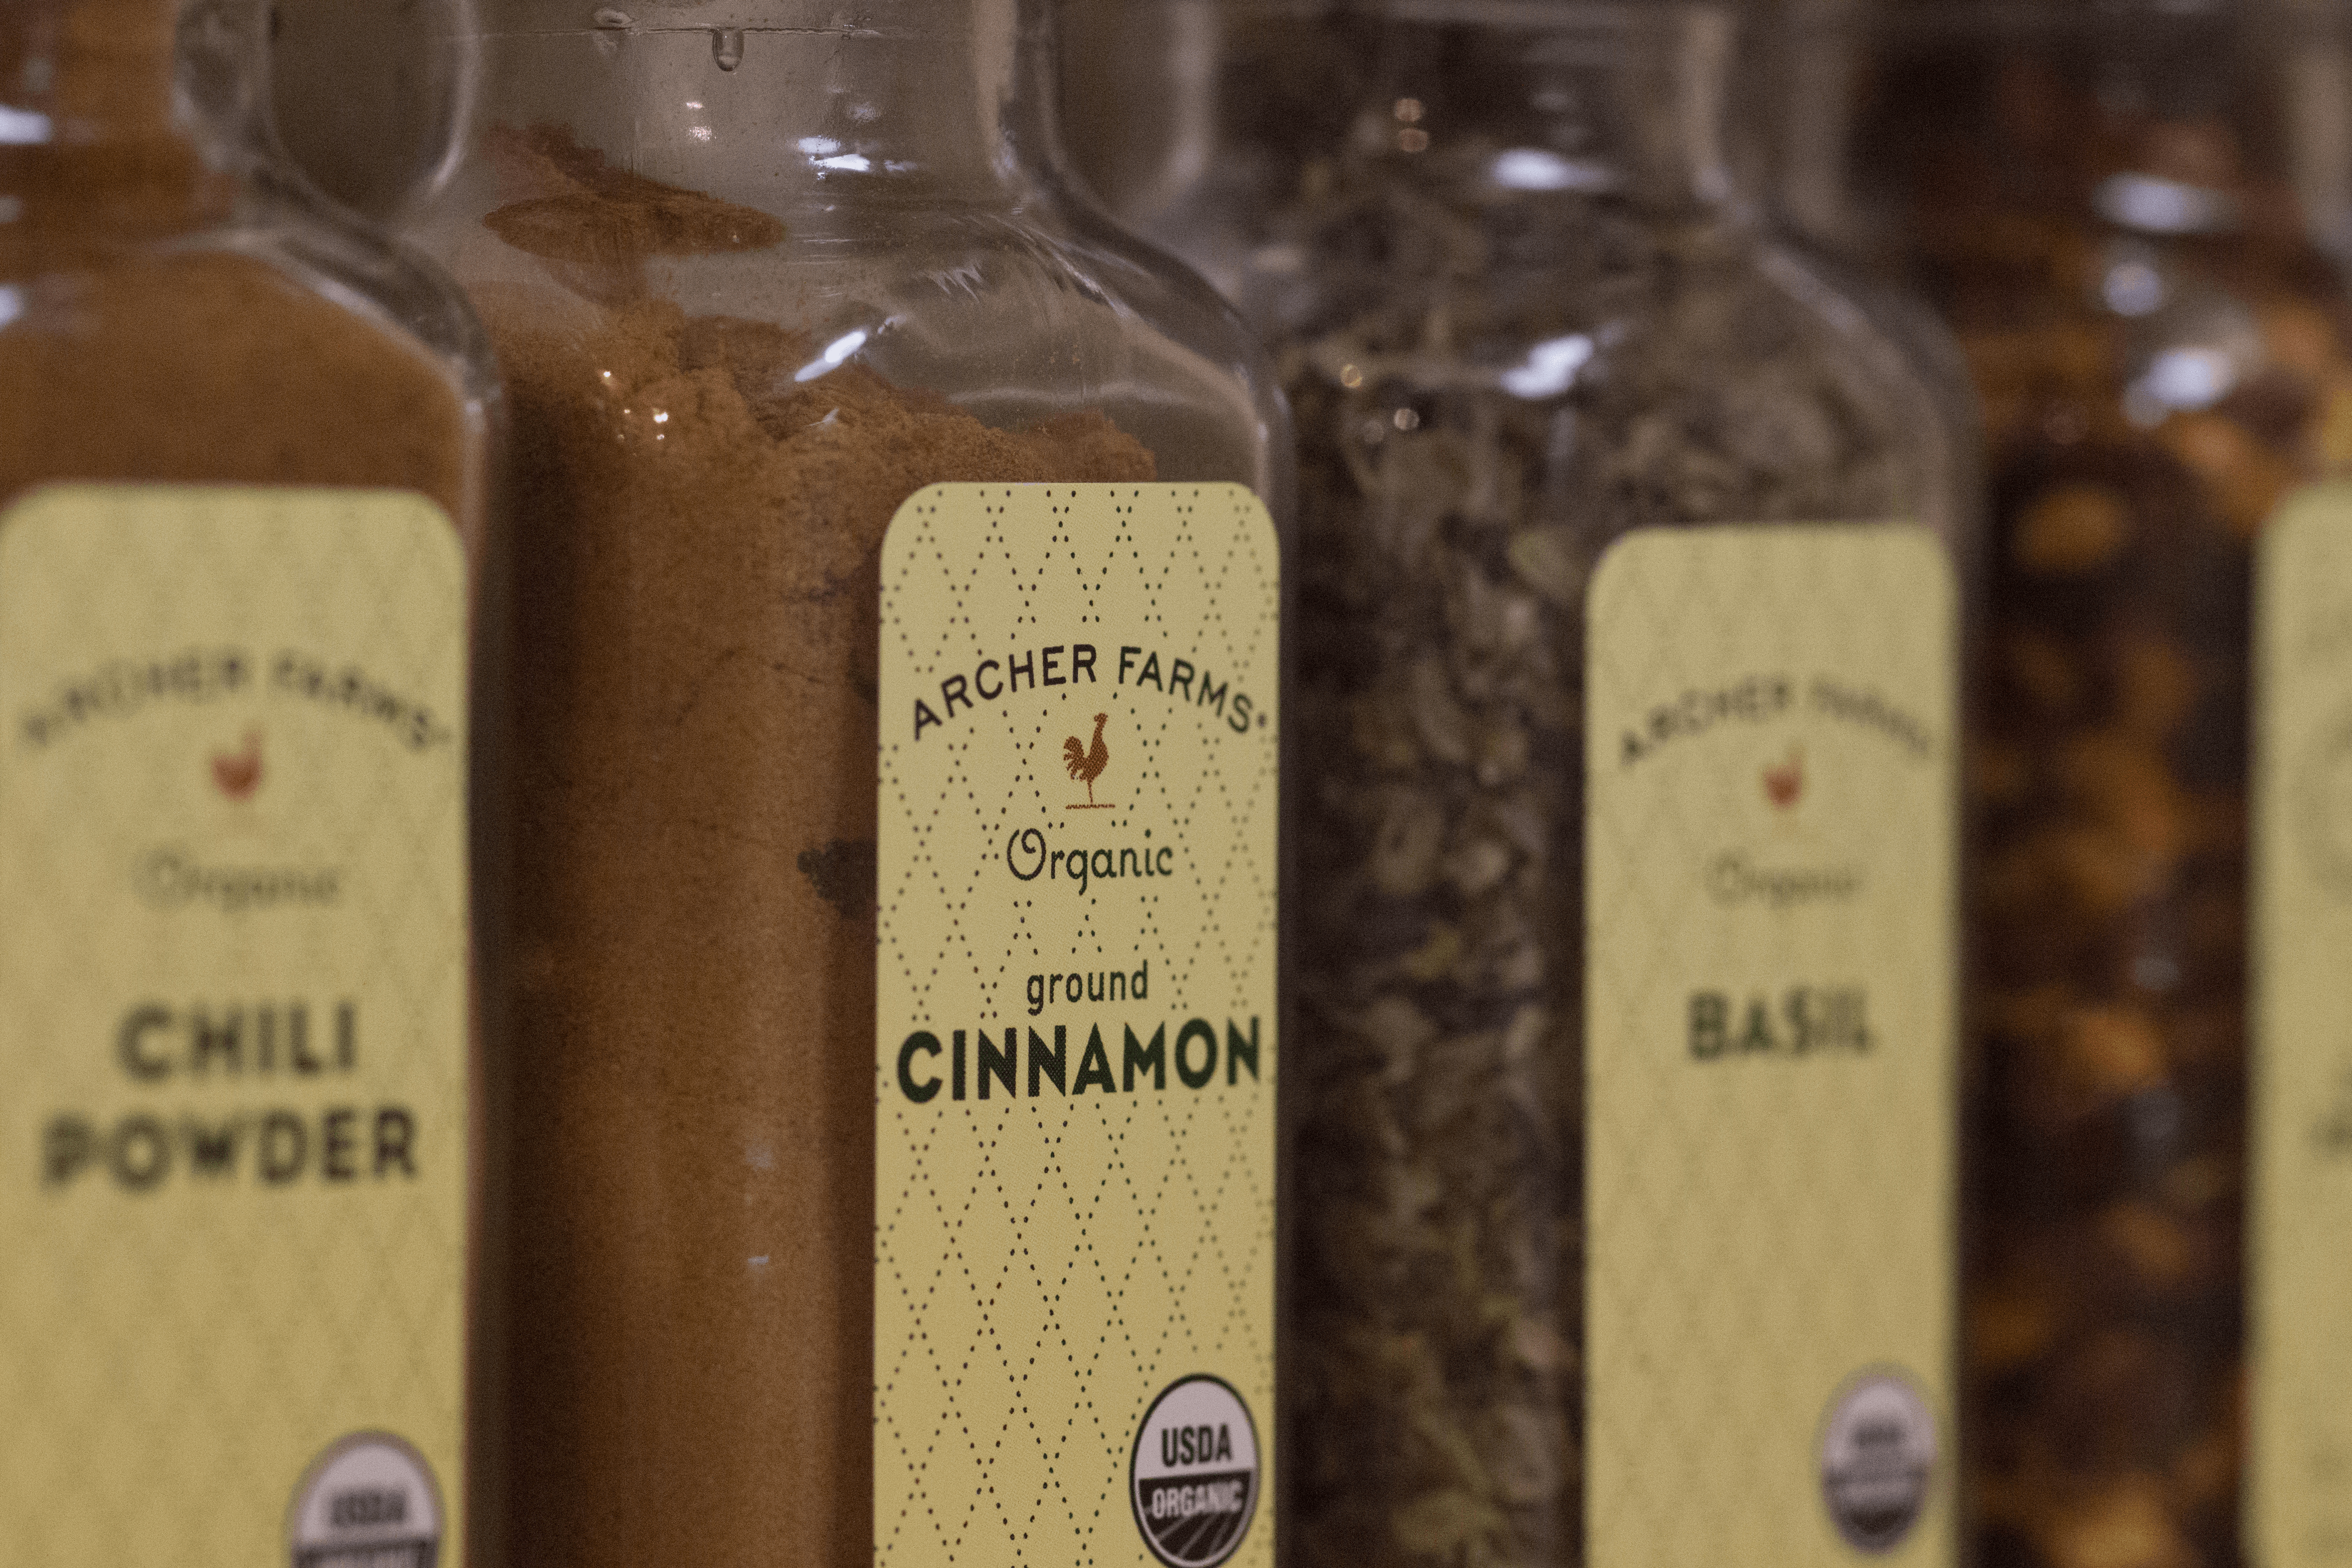 The Benefits of Cinnamon